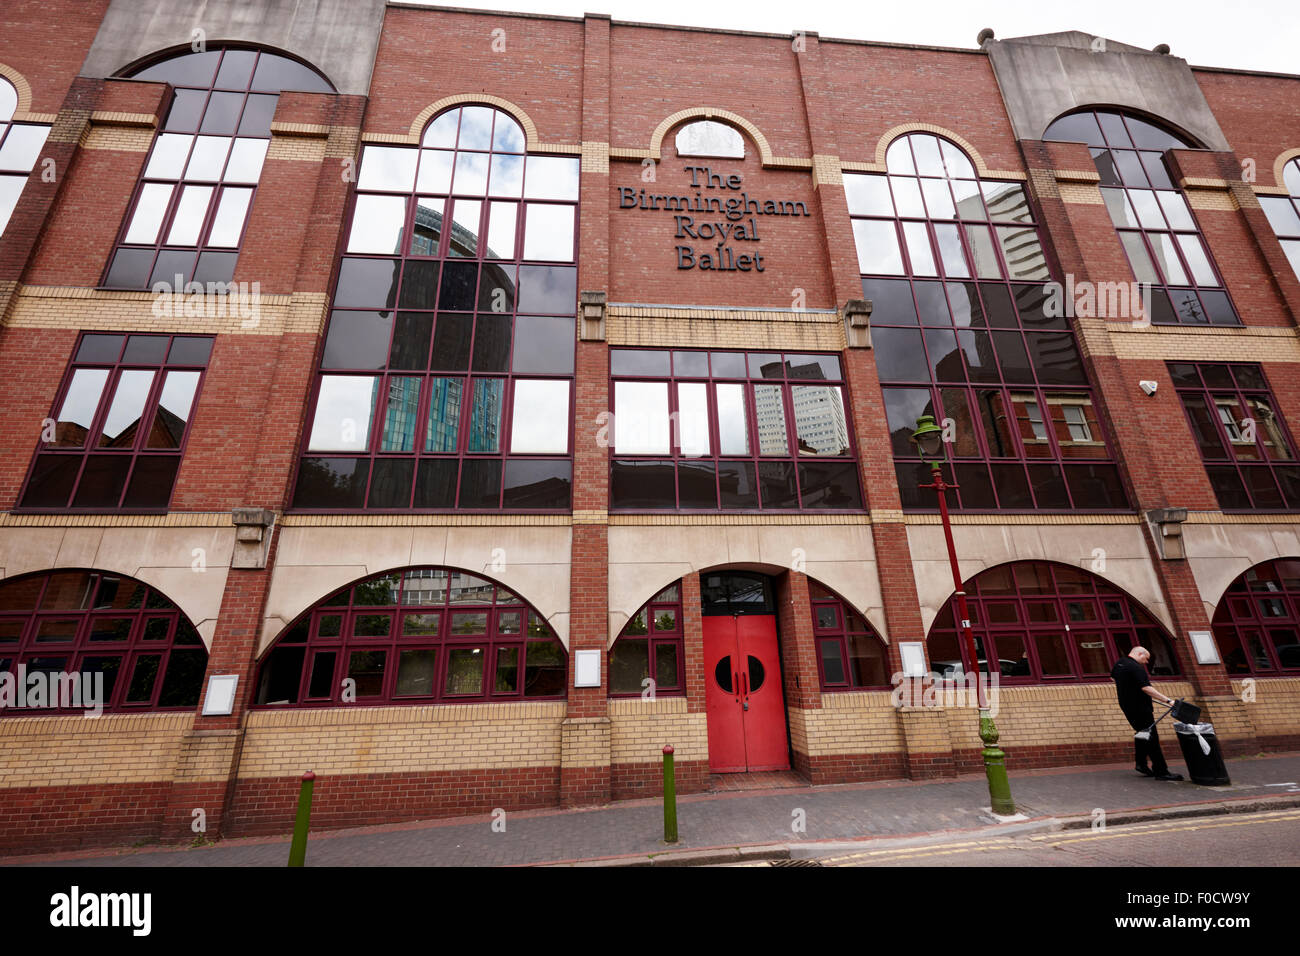 the Birmingham royal ballet building UK Stock Photo